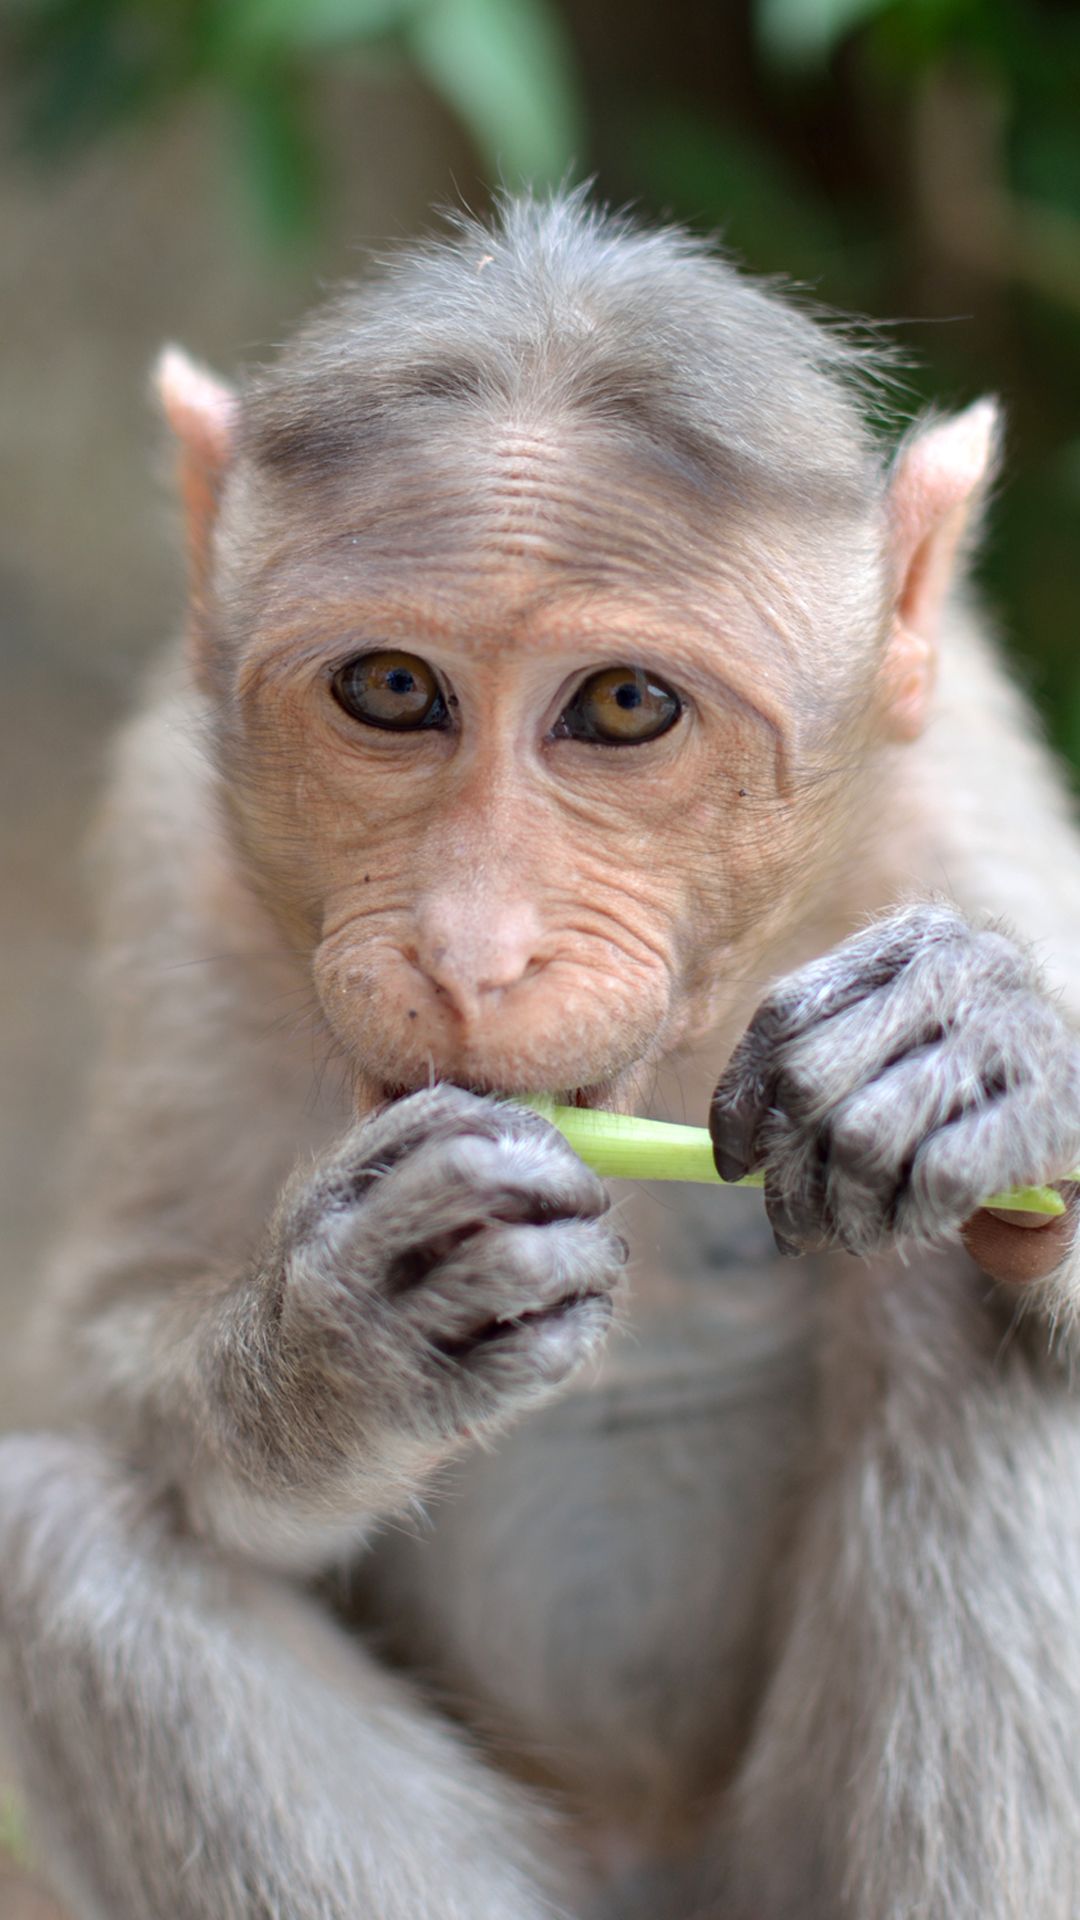 monkey posing to camera | My Photography | Pinterest | Monkey, Pose ...